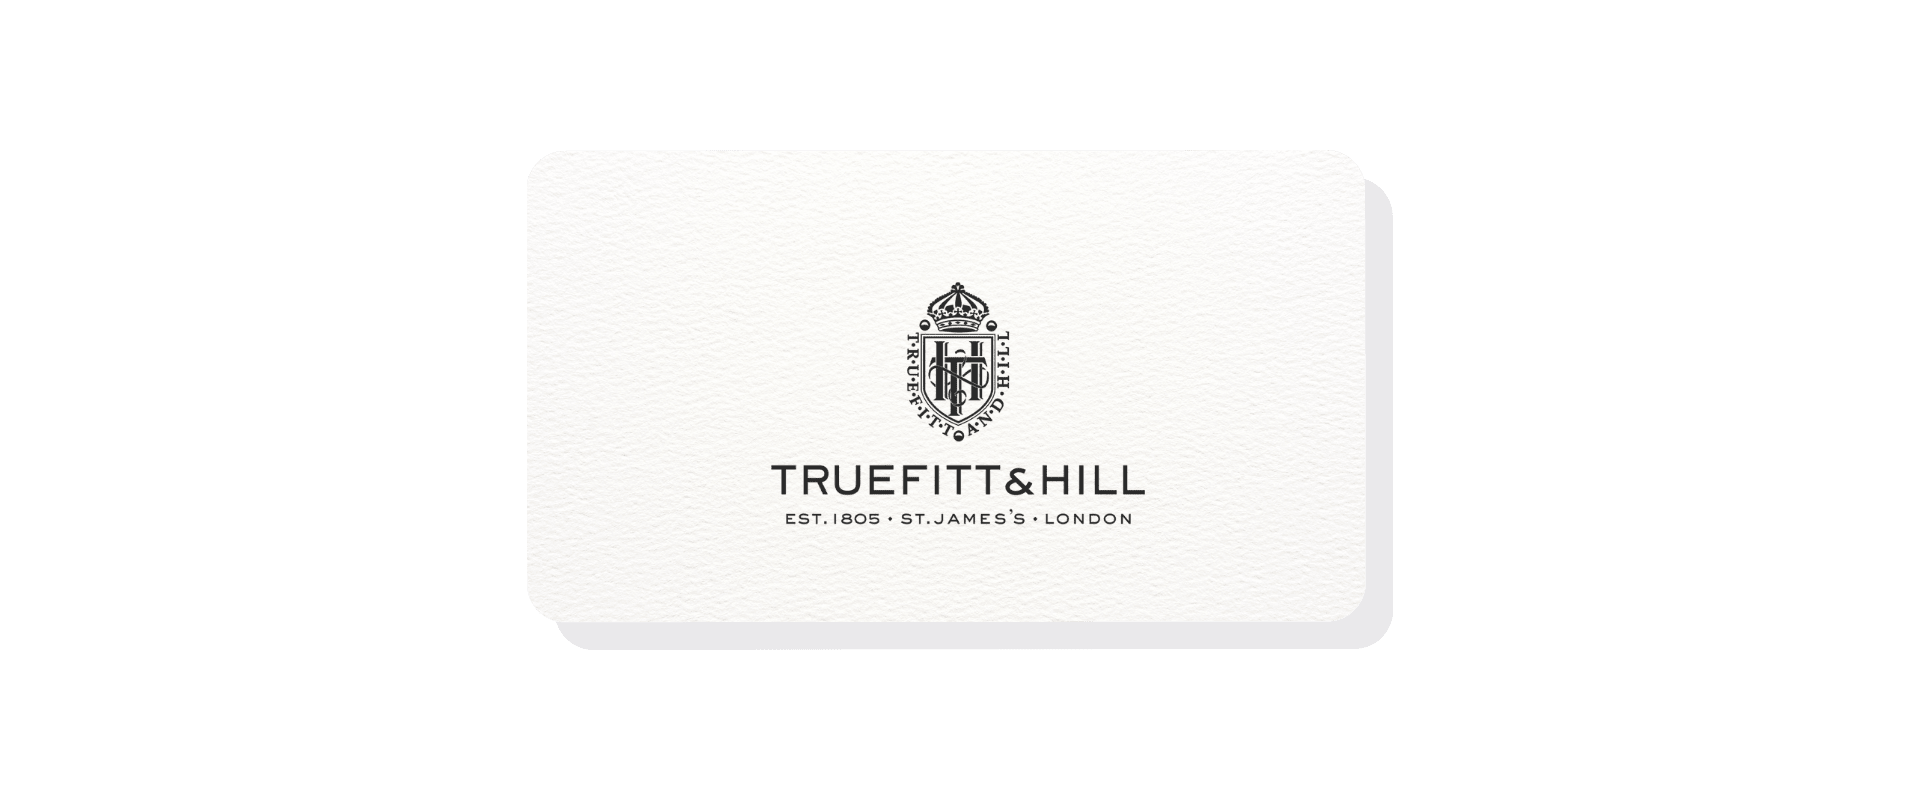 Truefitt & Hill gift card and gift voucher for men's grooming